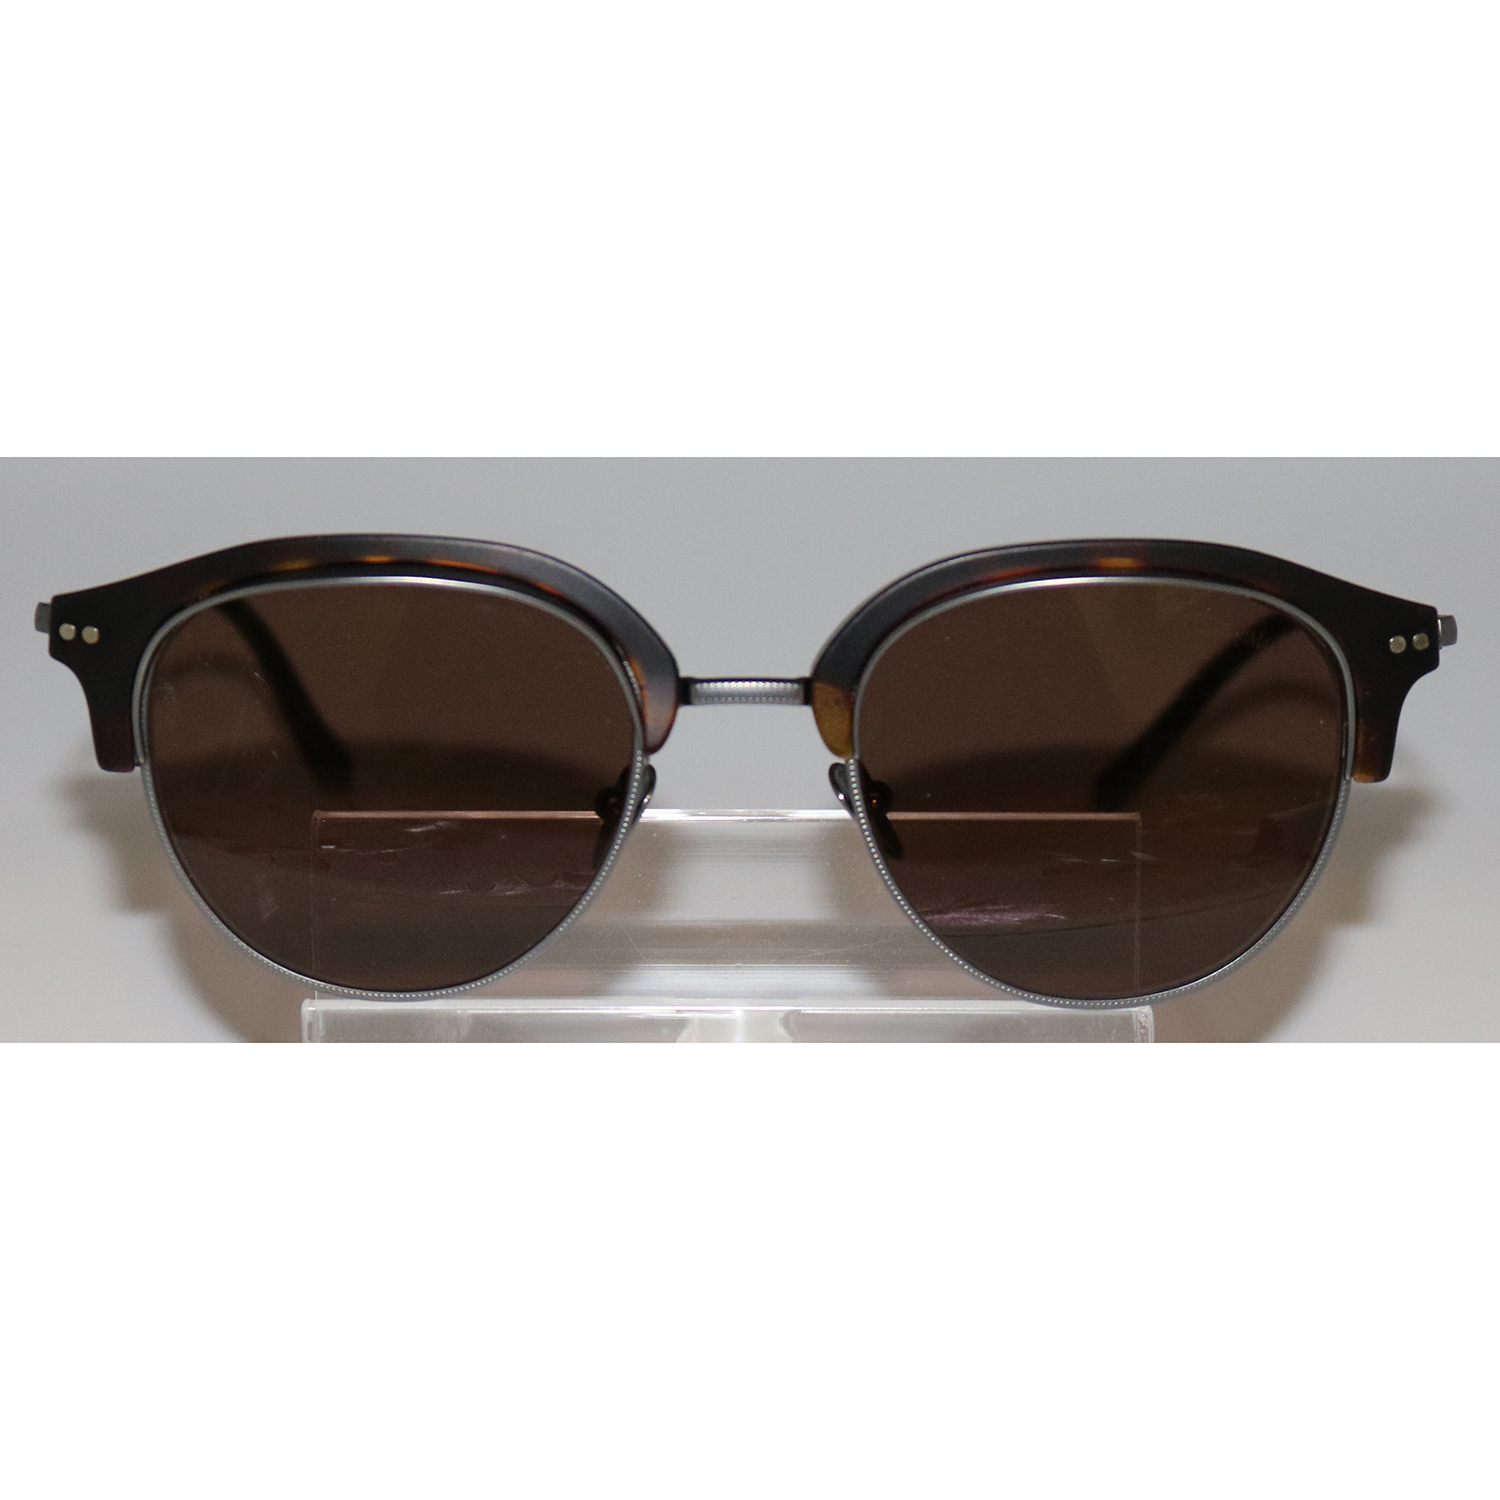 New Giorgio Armani 8117 508973 Gunmetal Havana Brown Sunglasses - See ...